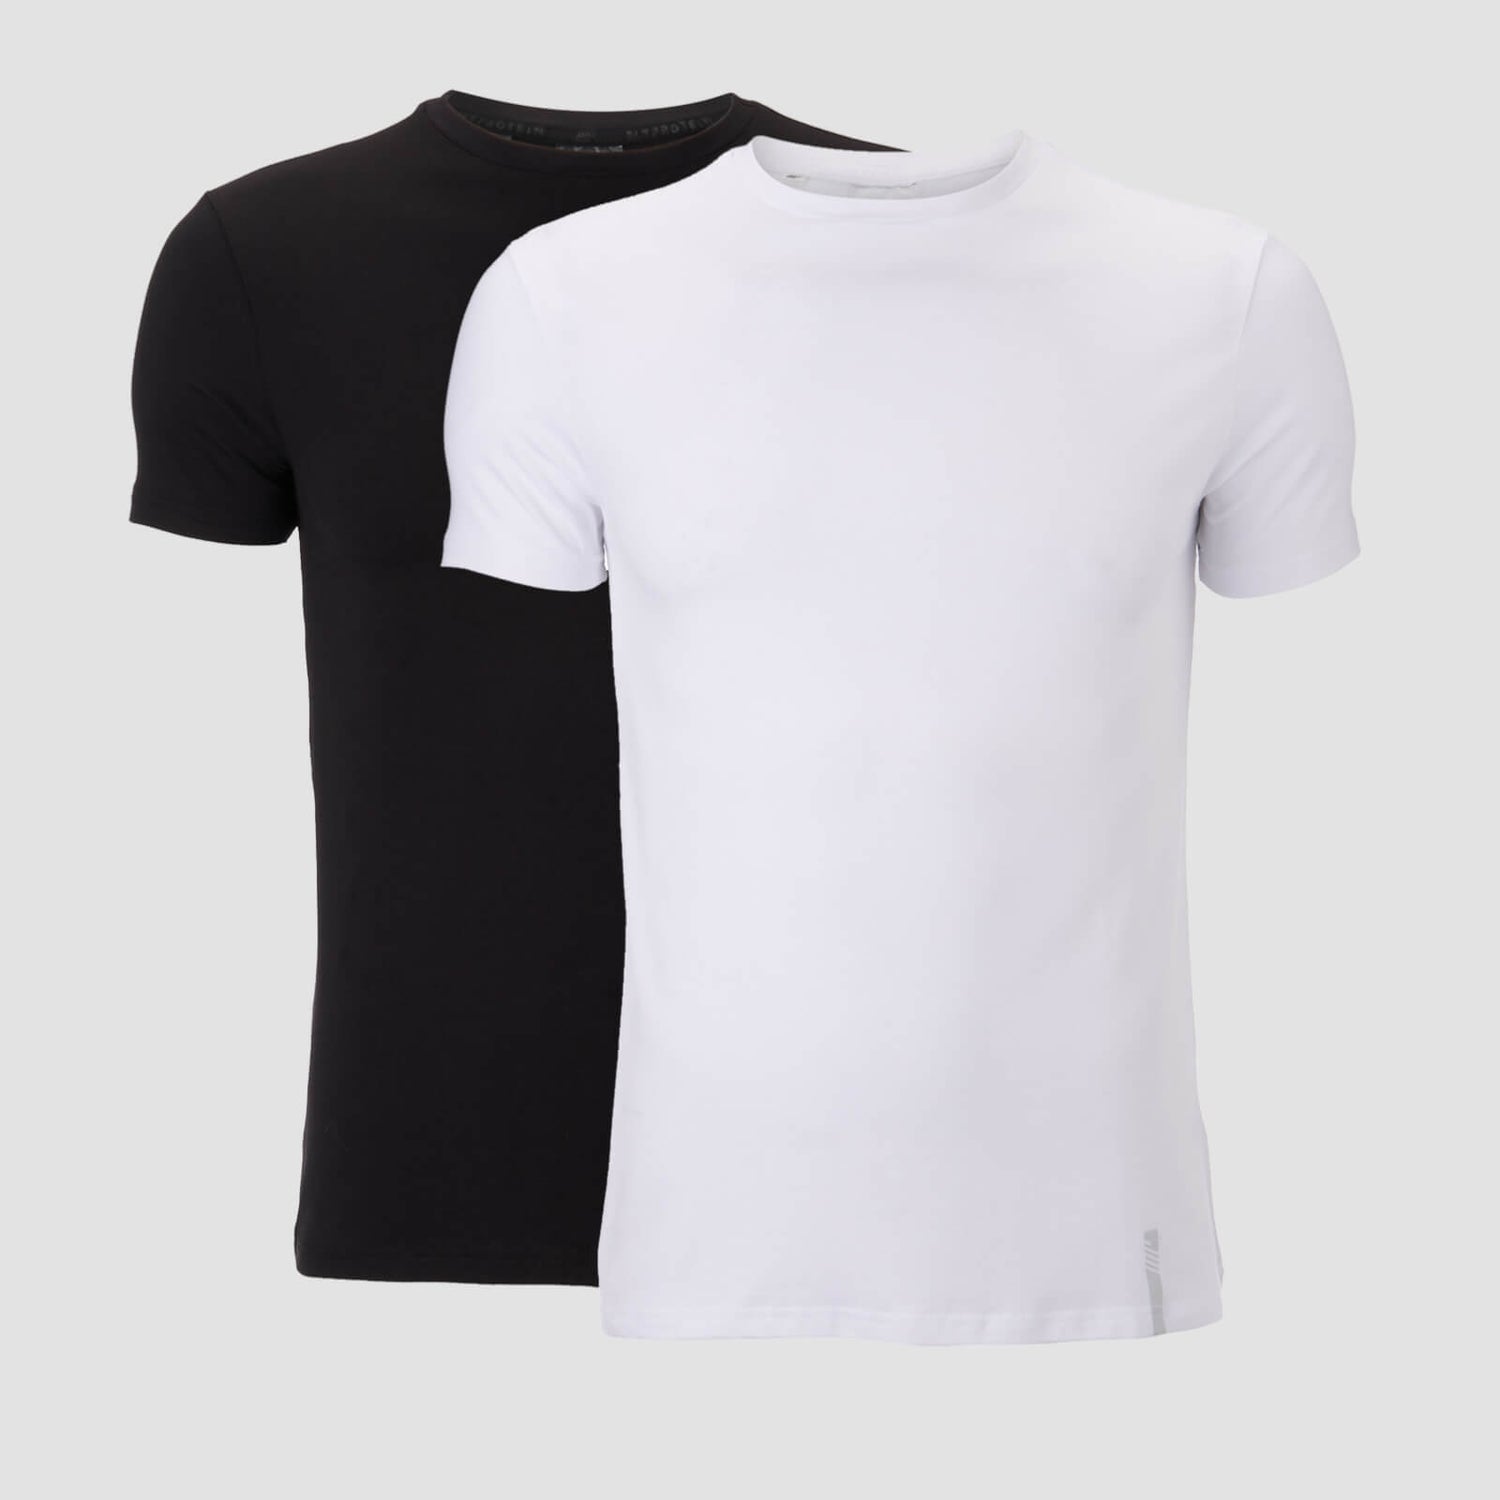 MP Herren Luxe Classic Crew T-Shirt — Schwarz/Weiß (2er Pack) - M